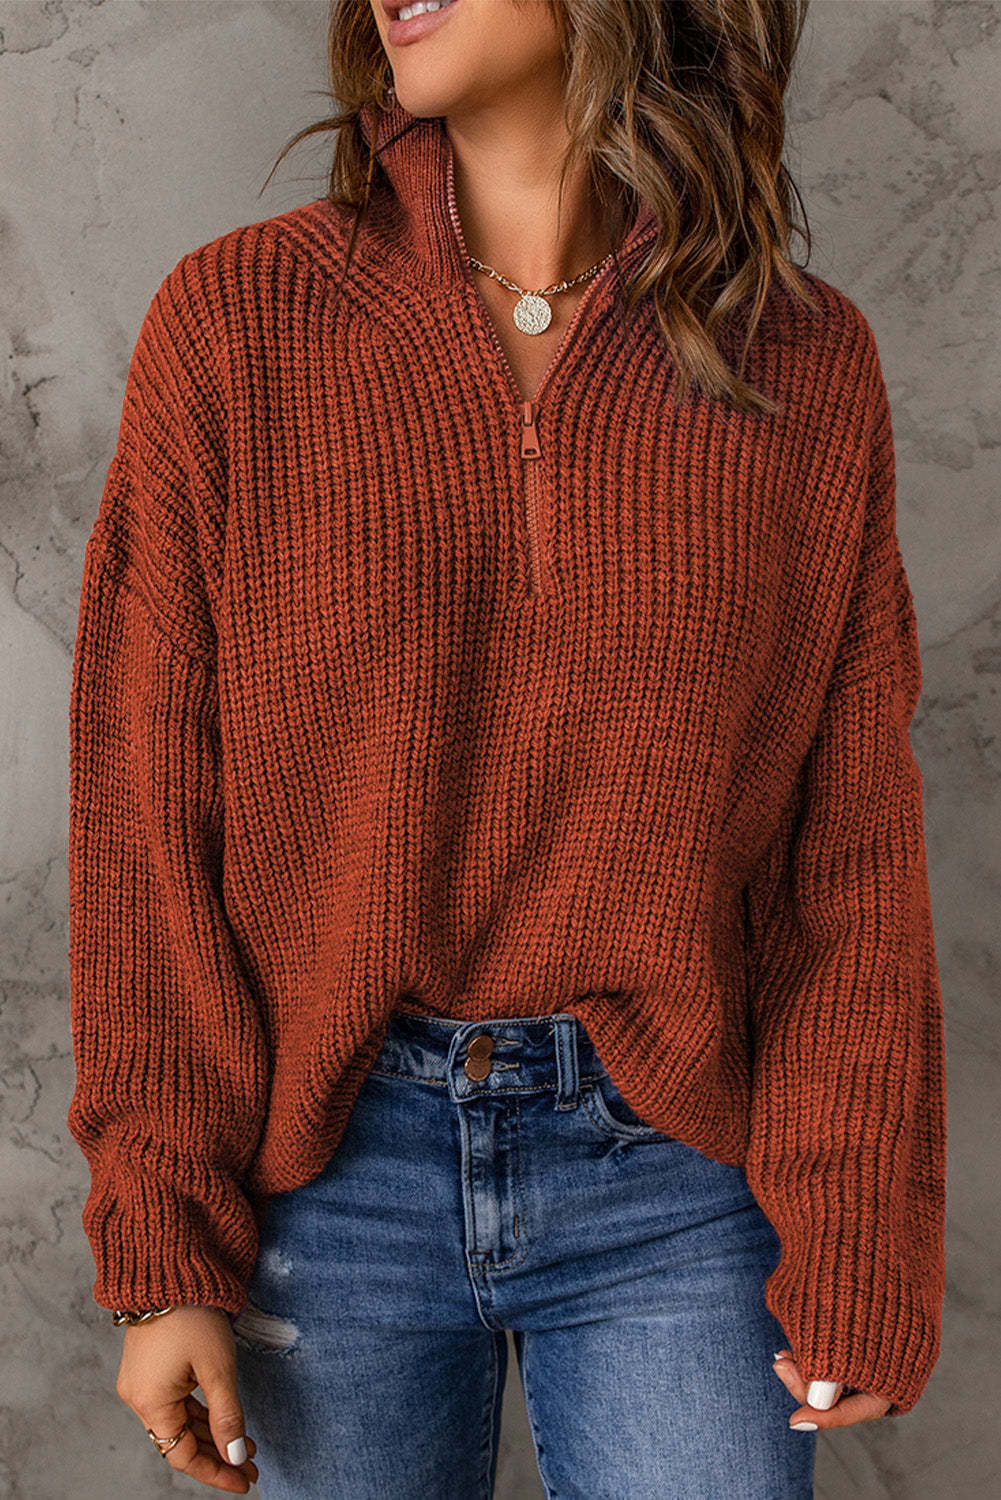 Zipped Turtleneck Knit Sweater $ 39.99 - Evaless